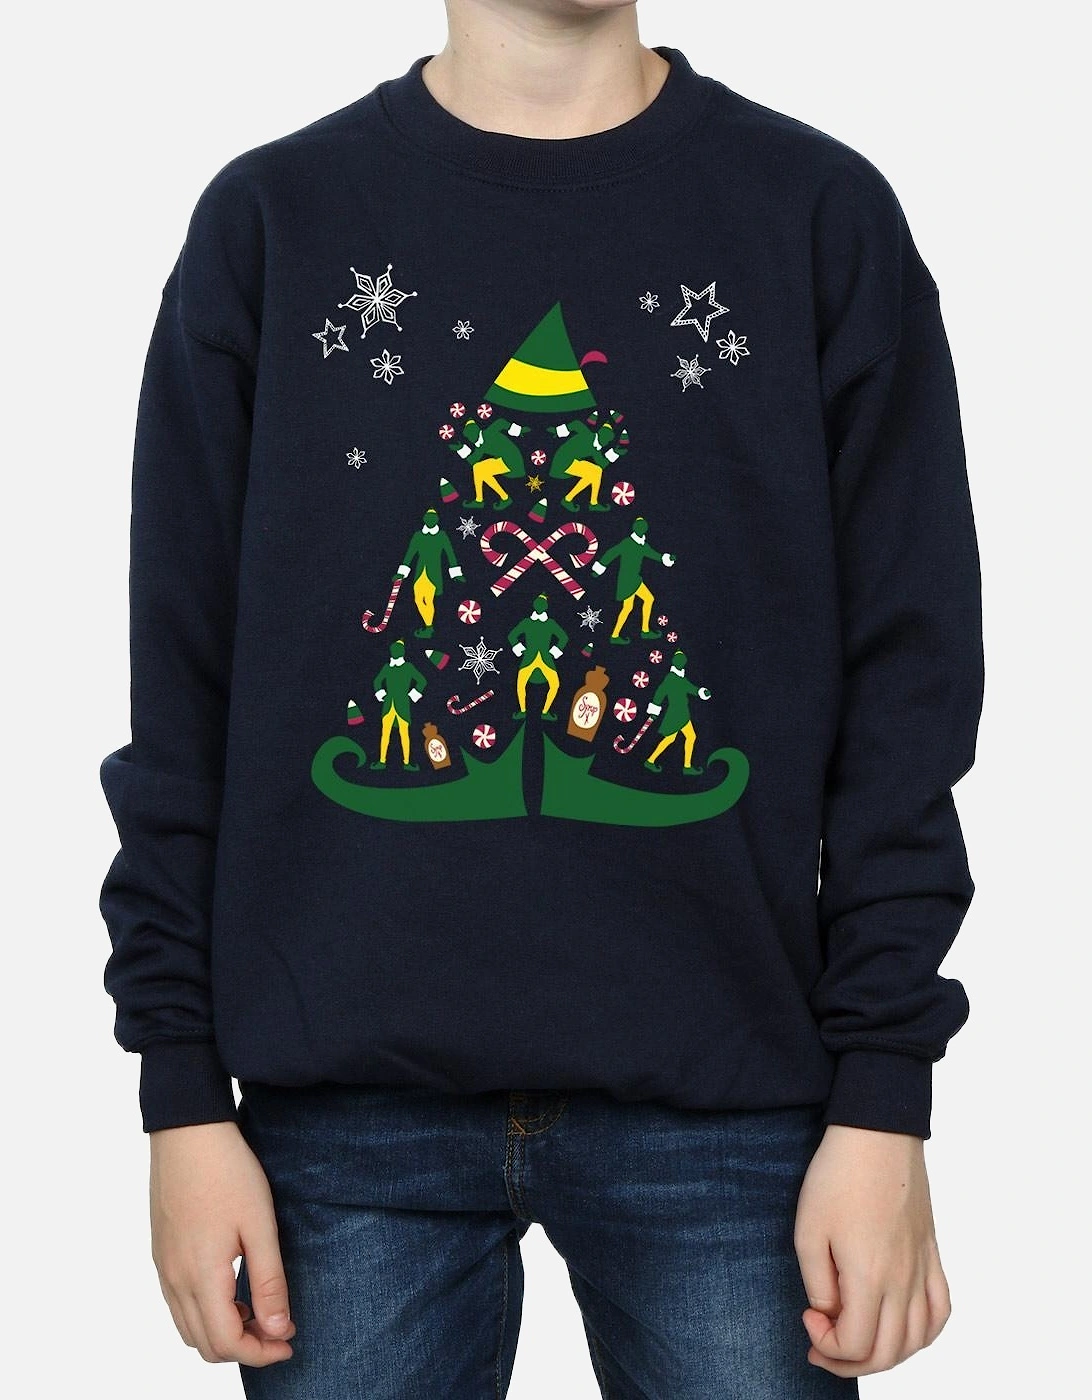 Boys Christmas Tree Sweatshirt